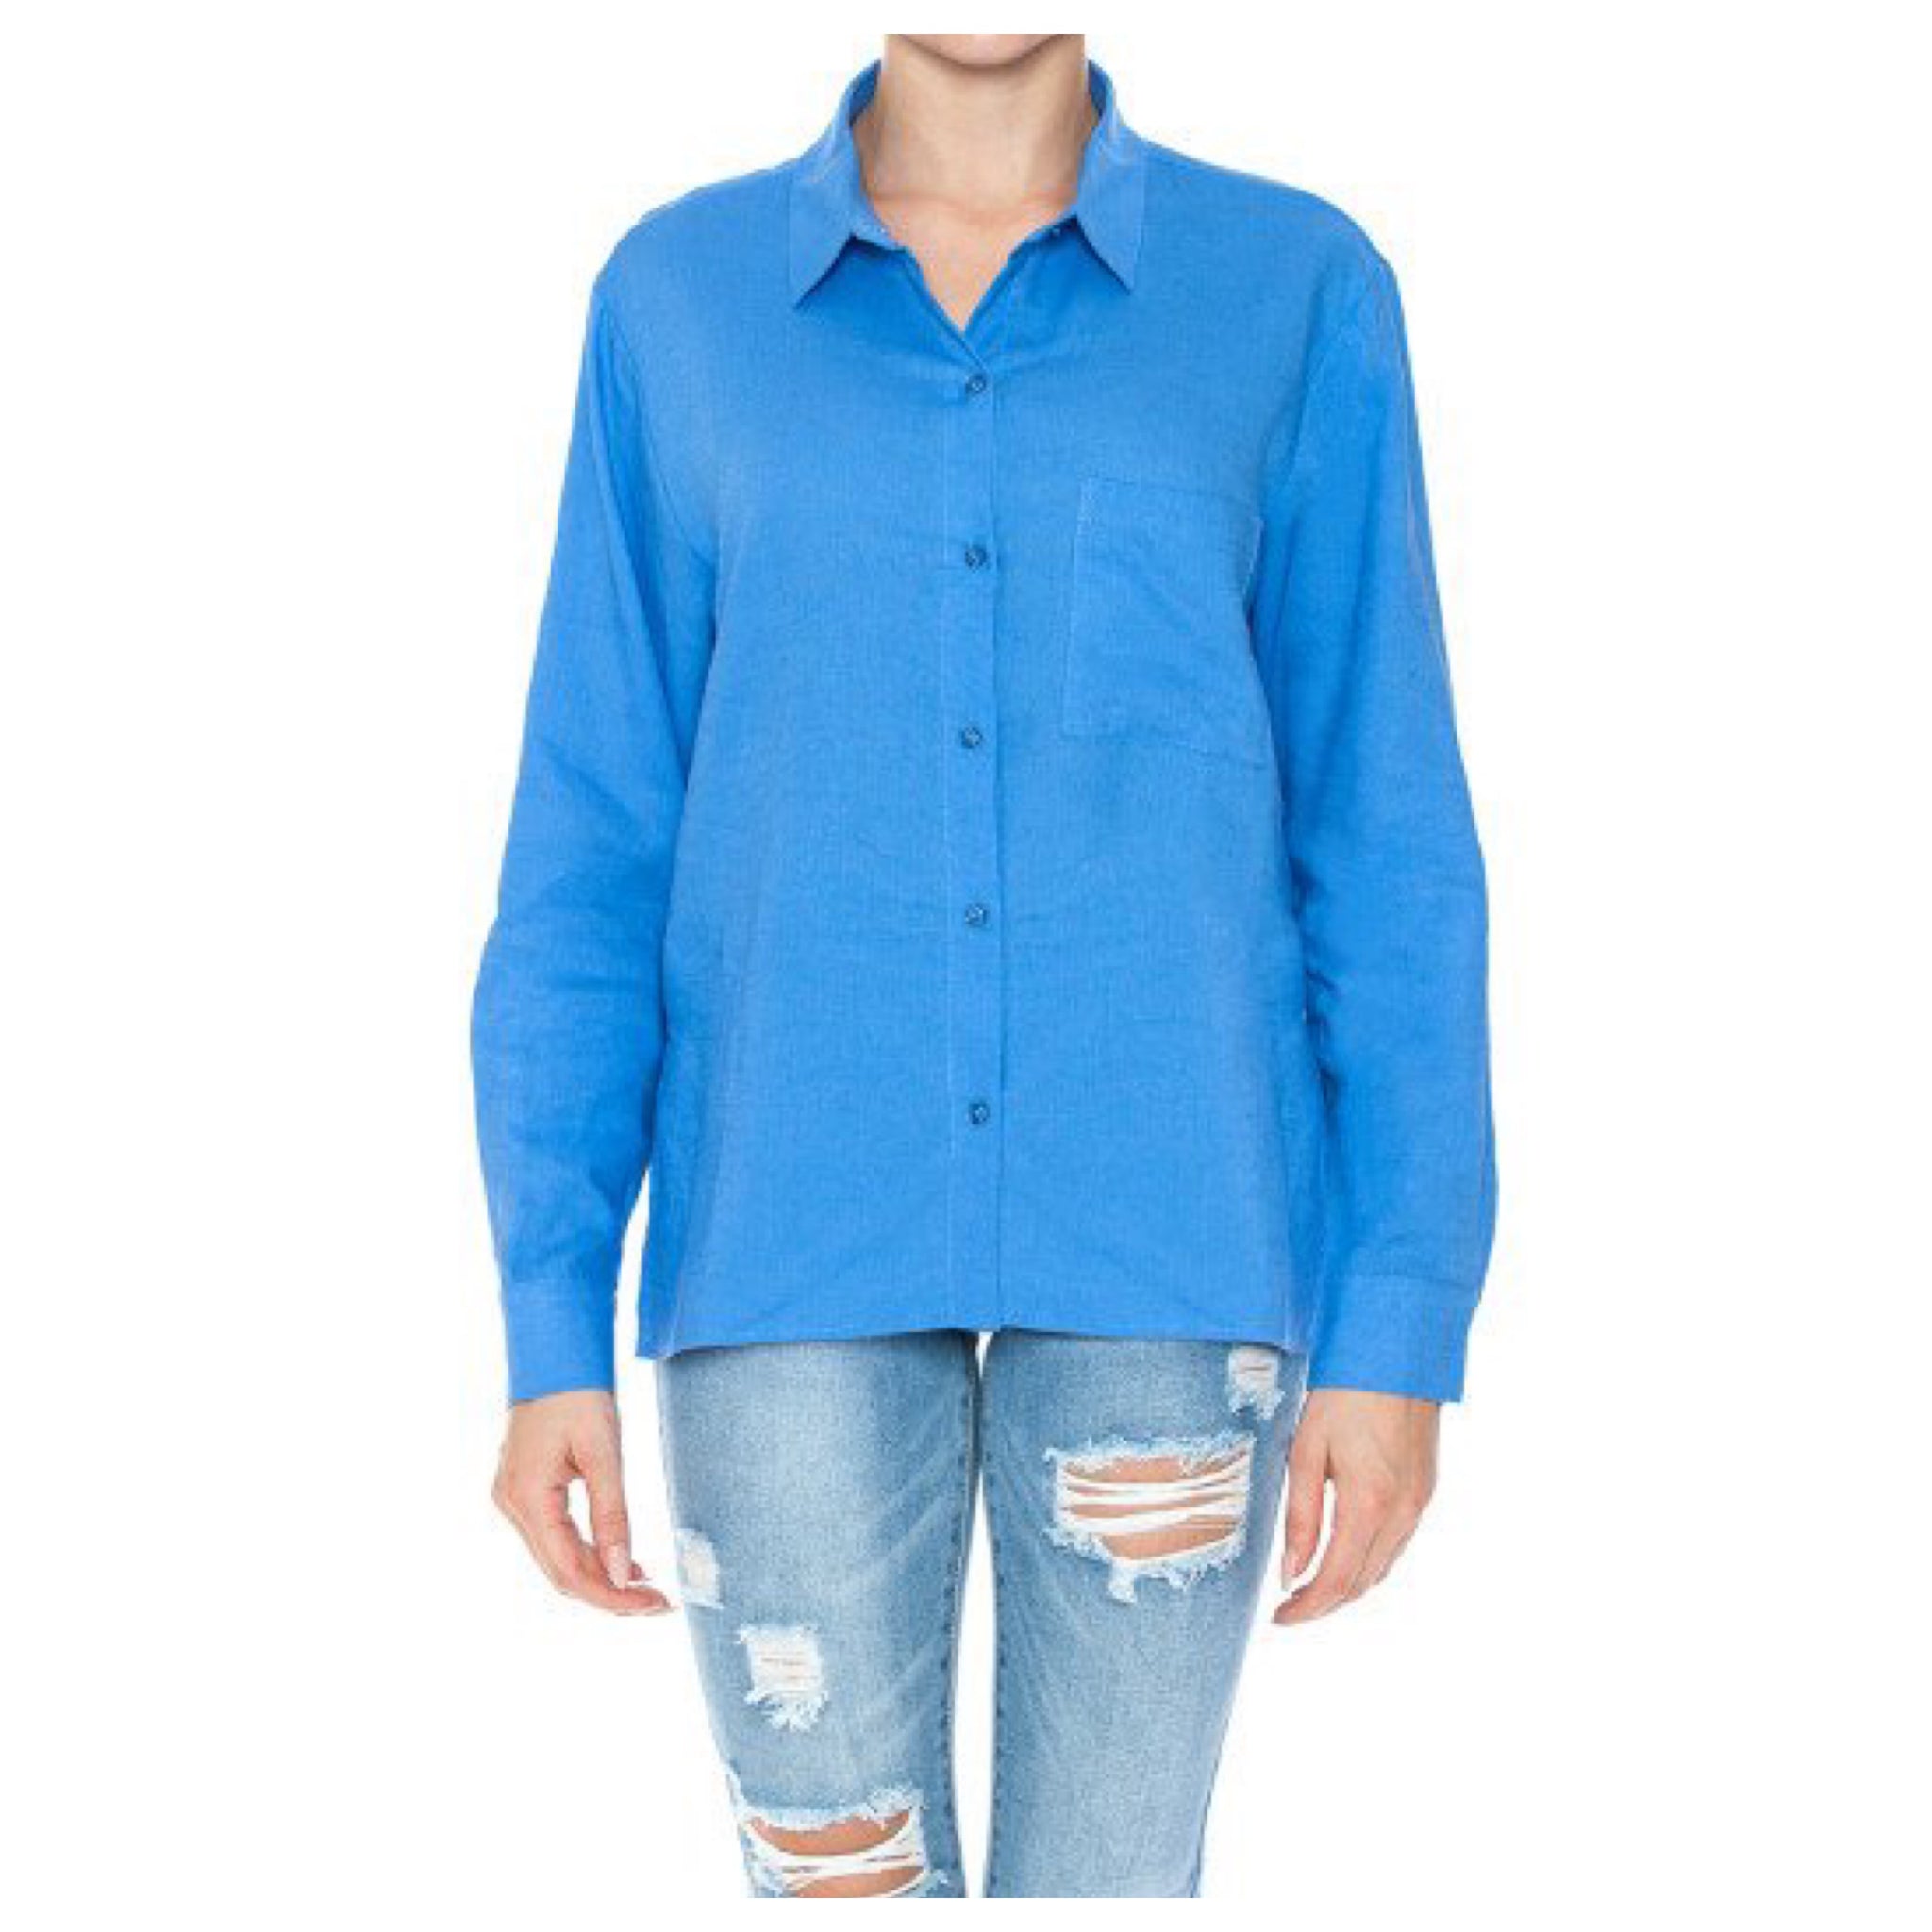 Blusa camisola azul